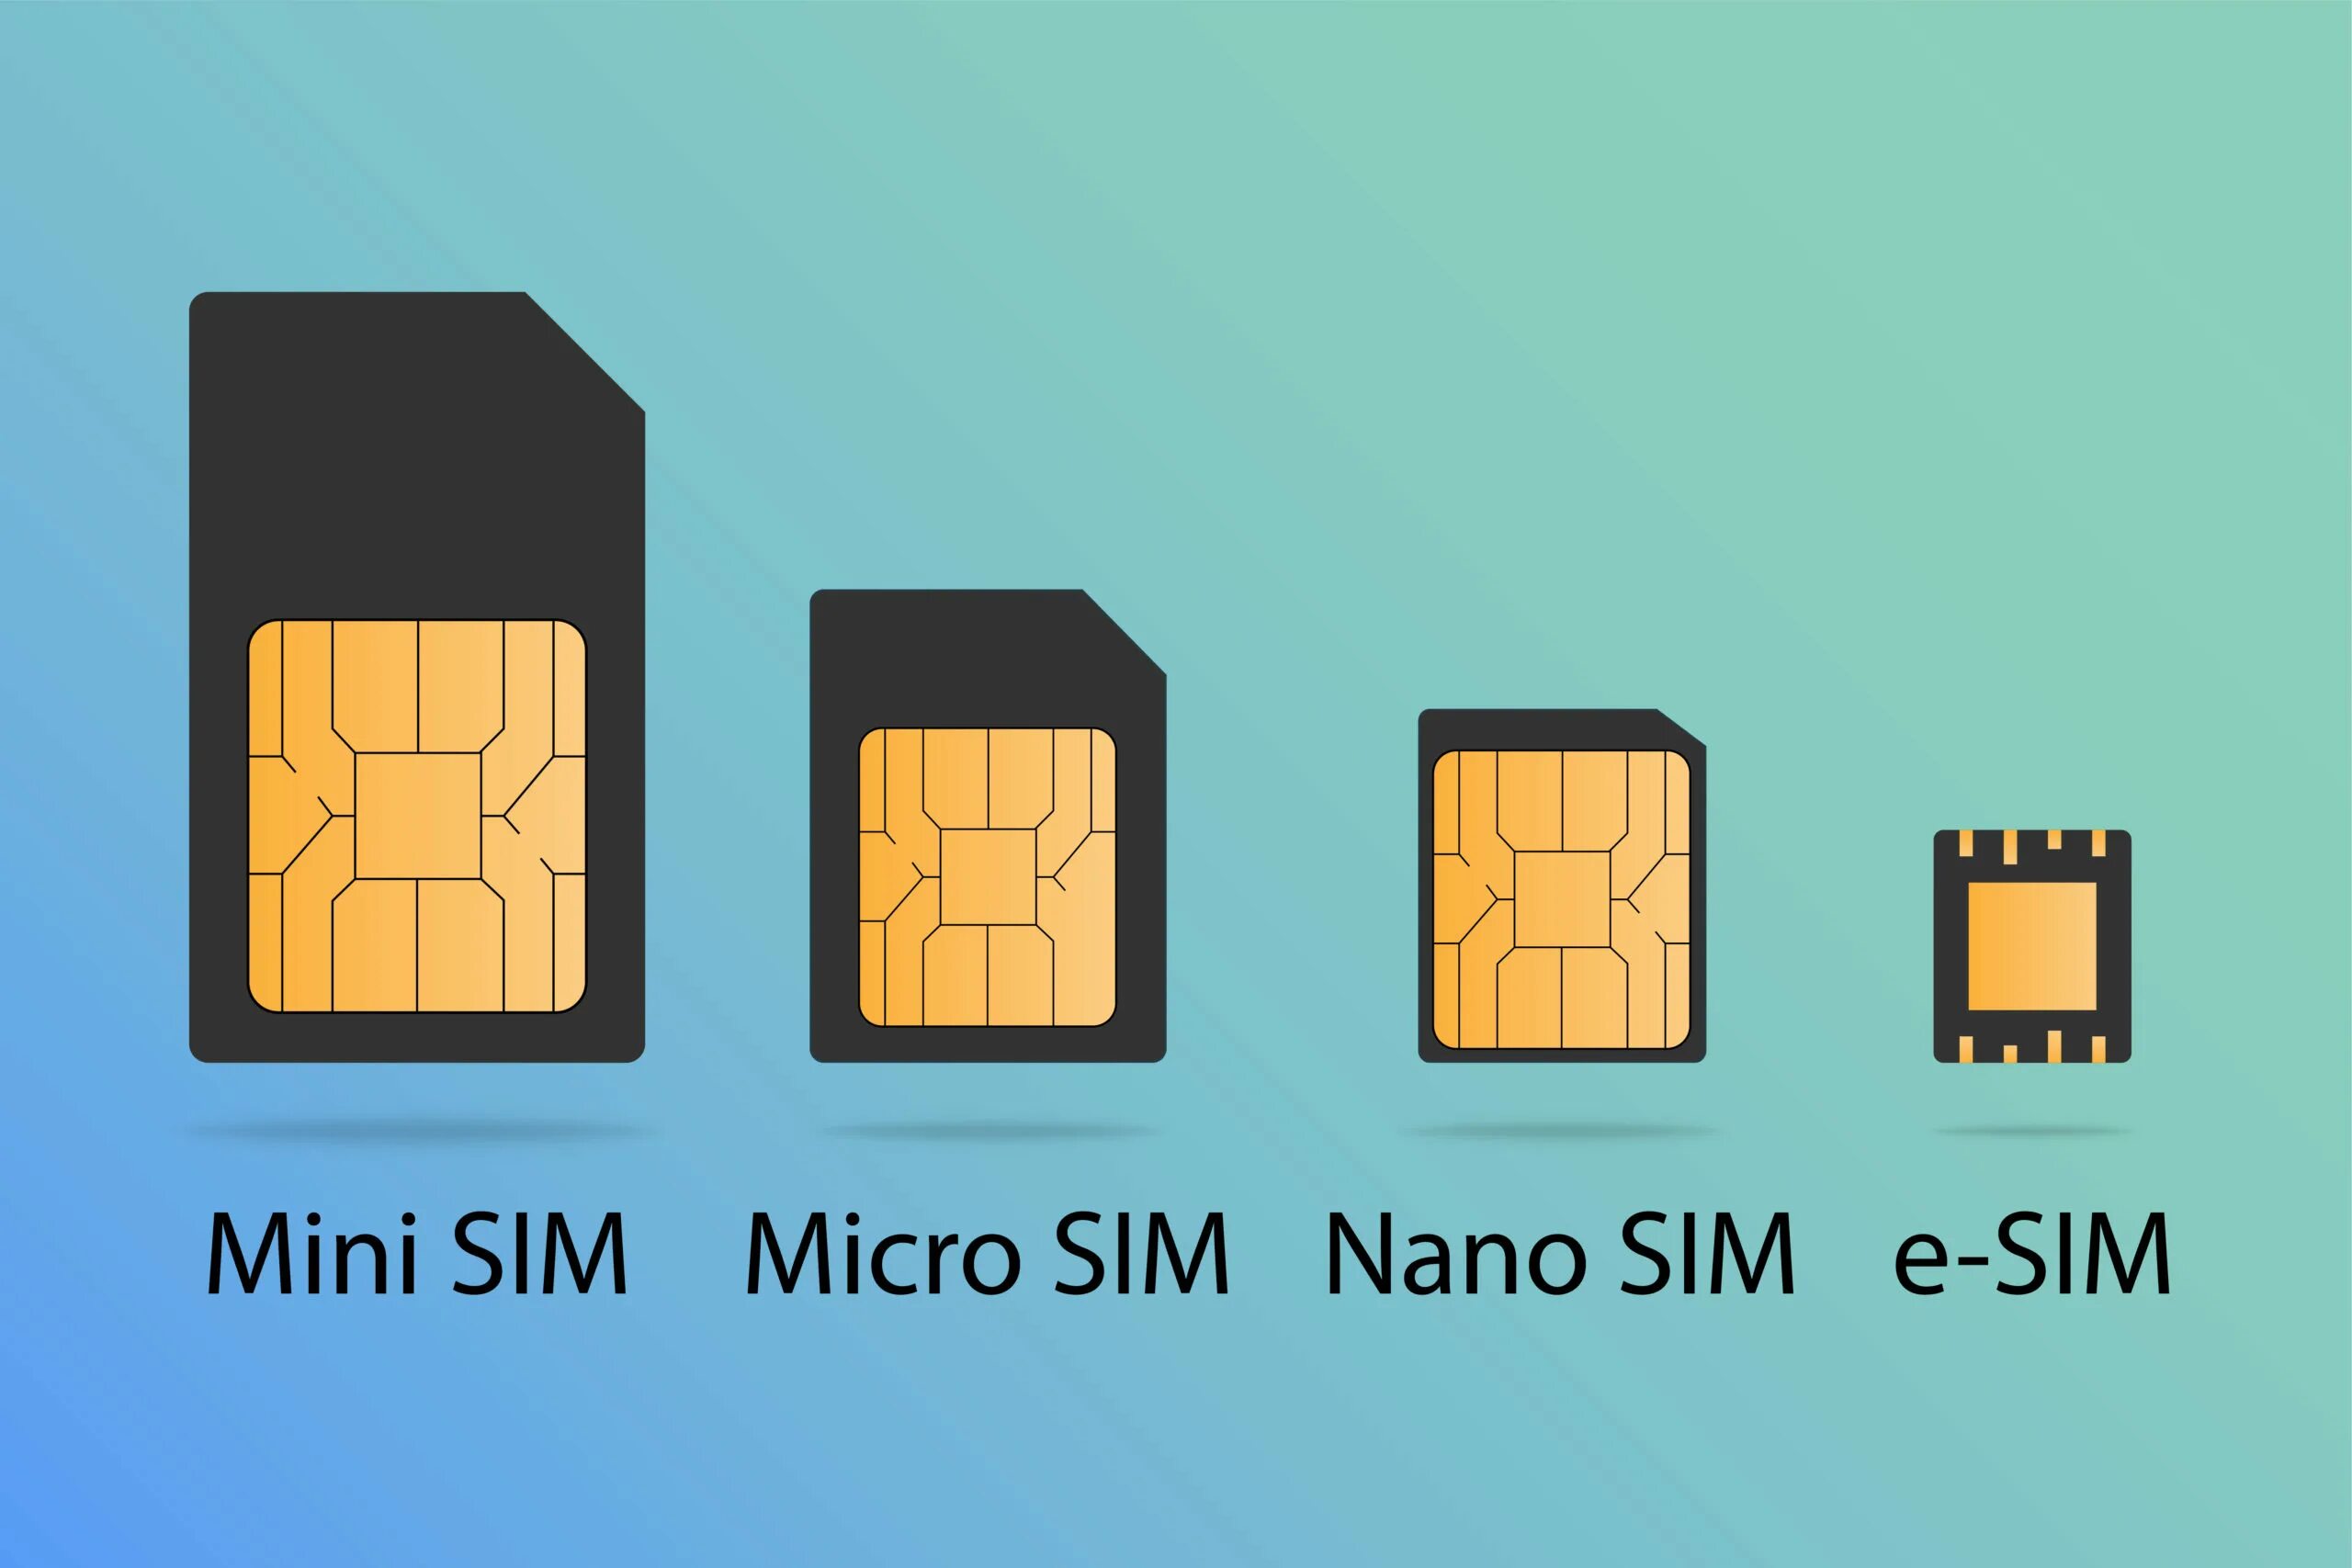 Микро сим и нано сим. Mini-SIM / Micro-SIM / Nano-SIM. Mini SIM 2ff. SIM Mini SIM Micro SIM Nano SIM. Mini SIM Micro SIM отличия.